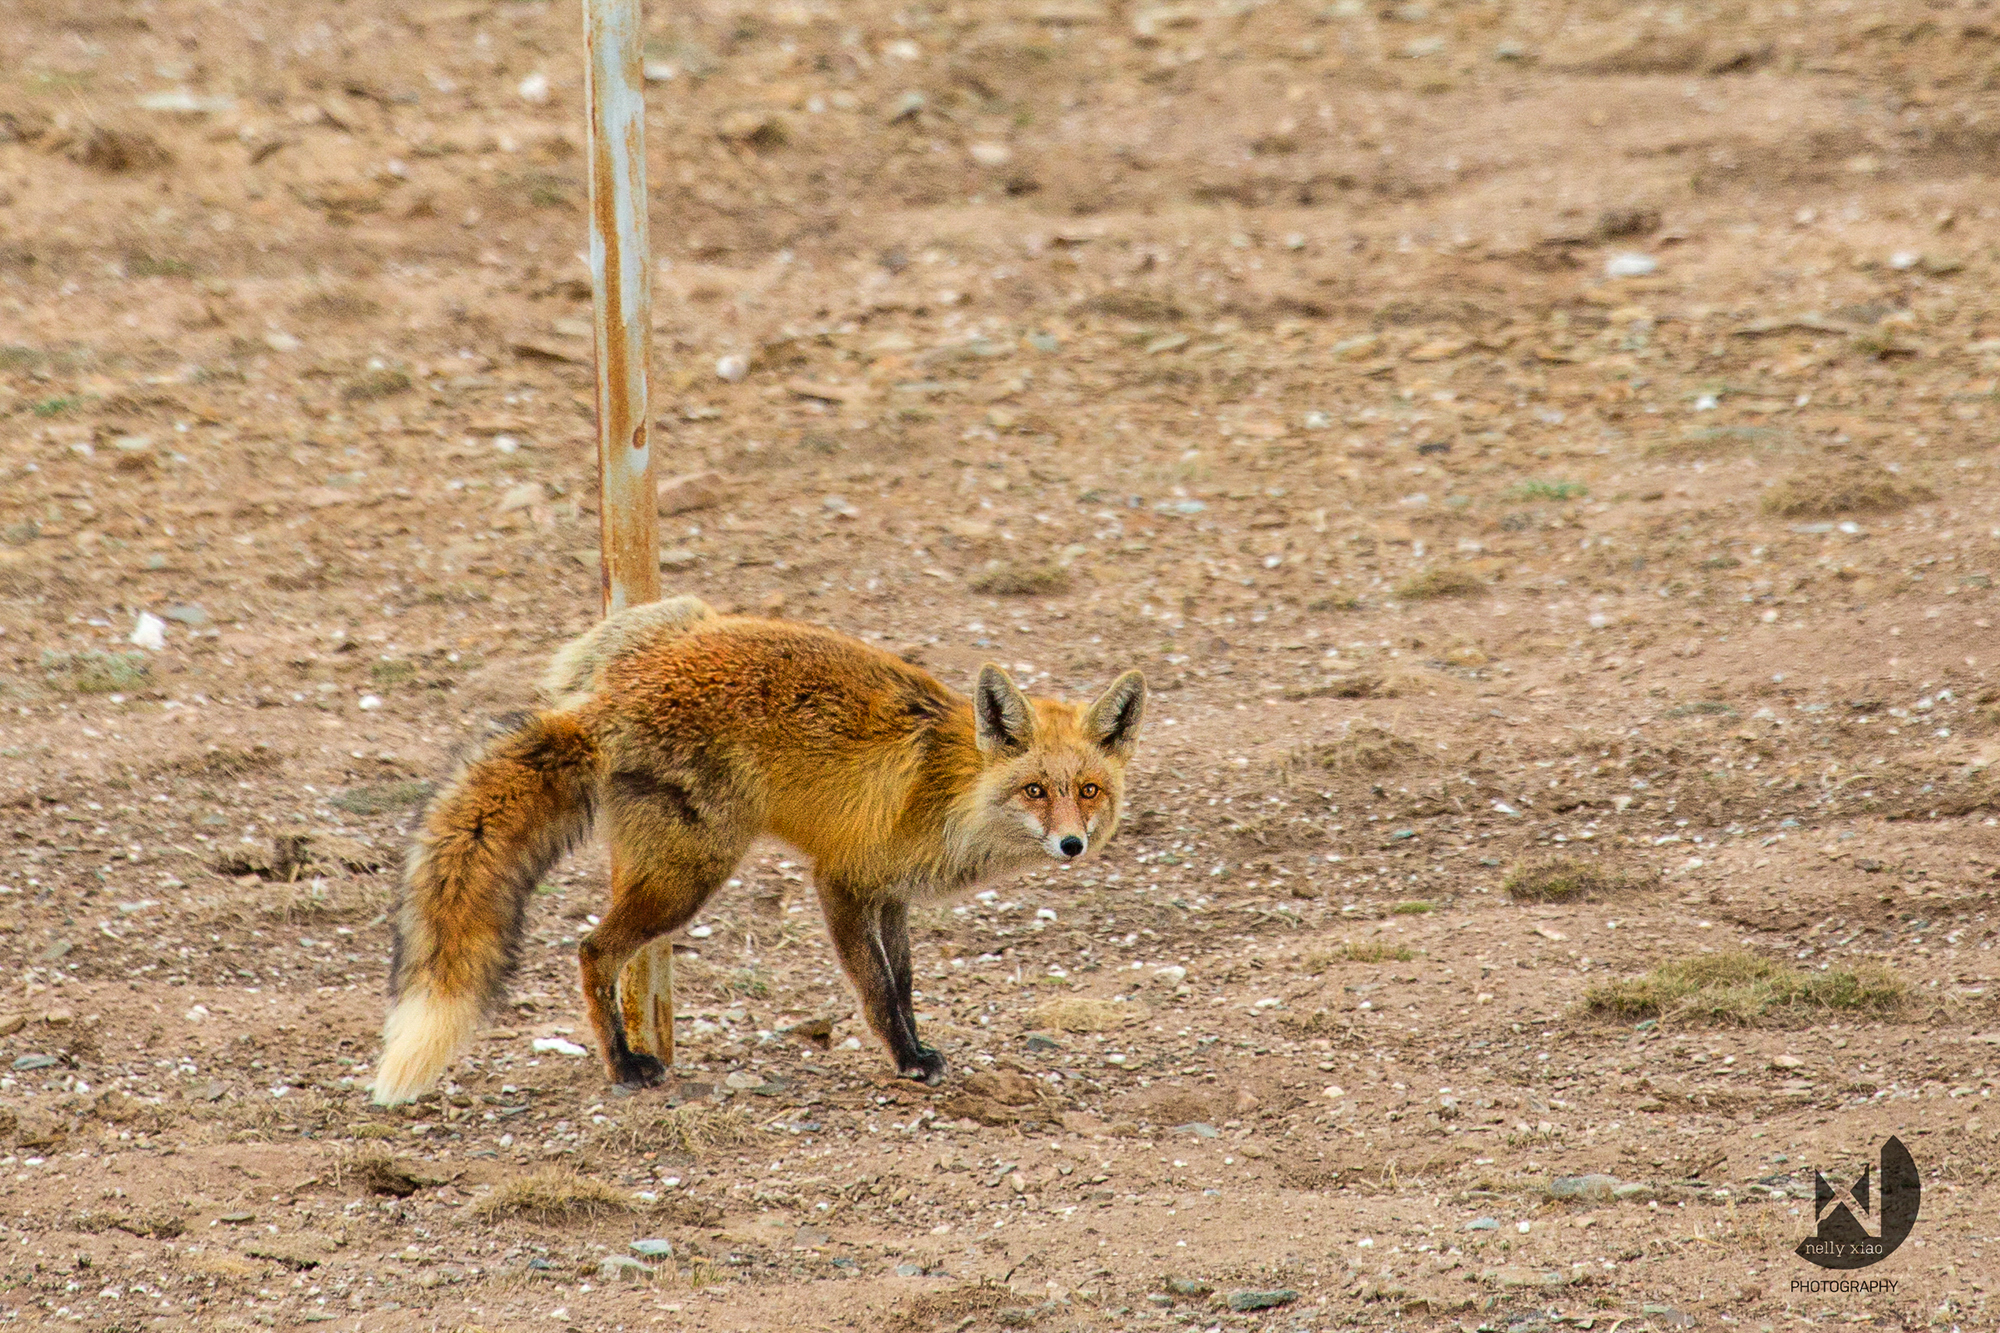   Red fox   Kekexili Wildlife Conservation, June 2015 